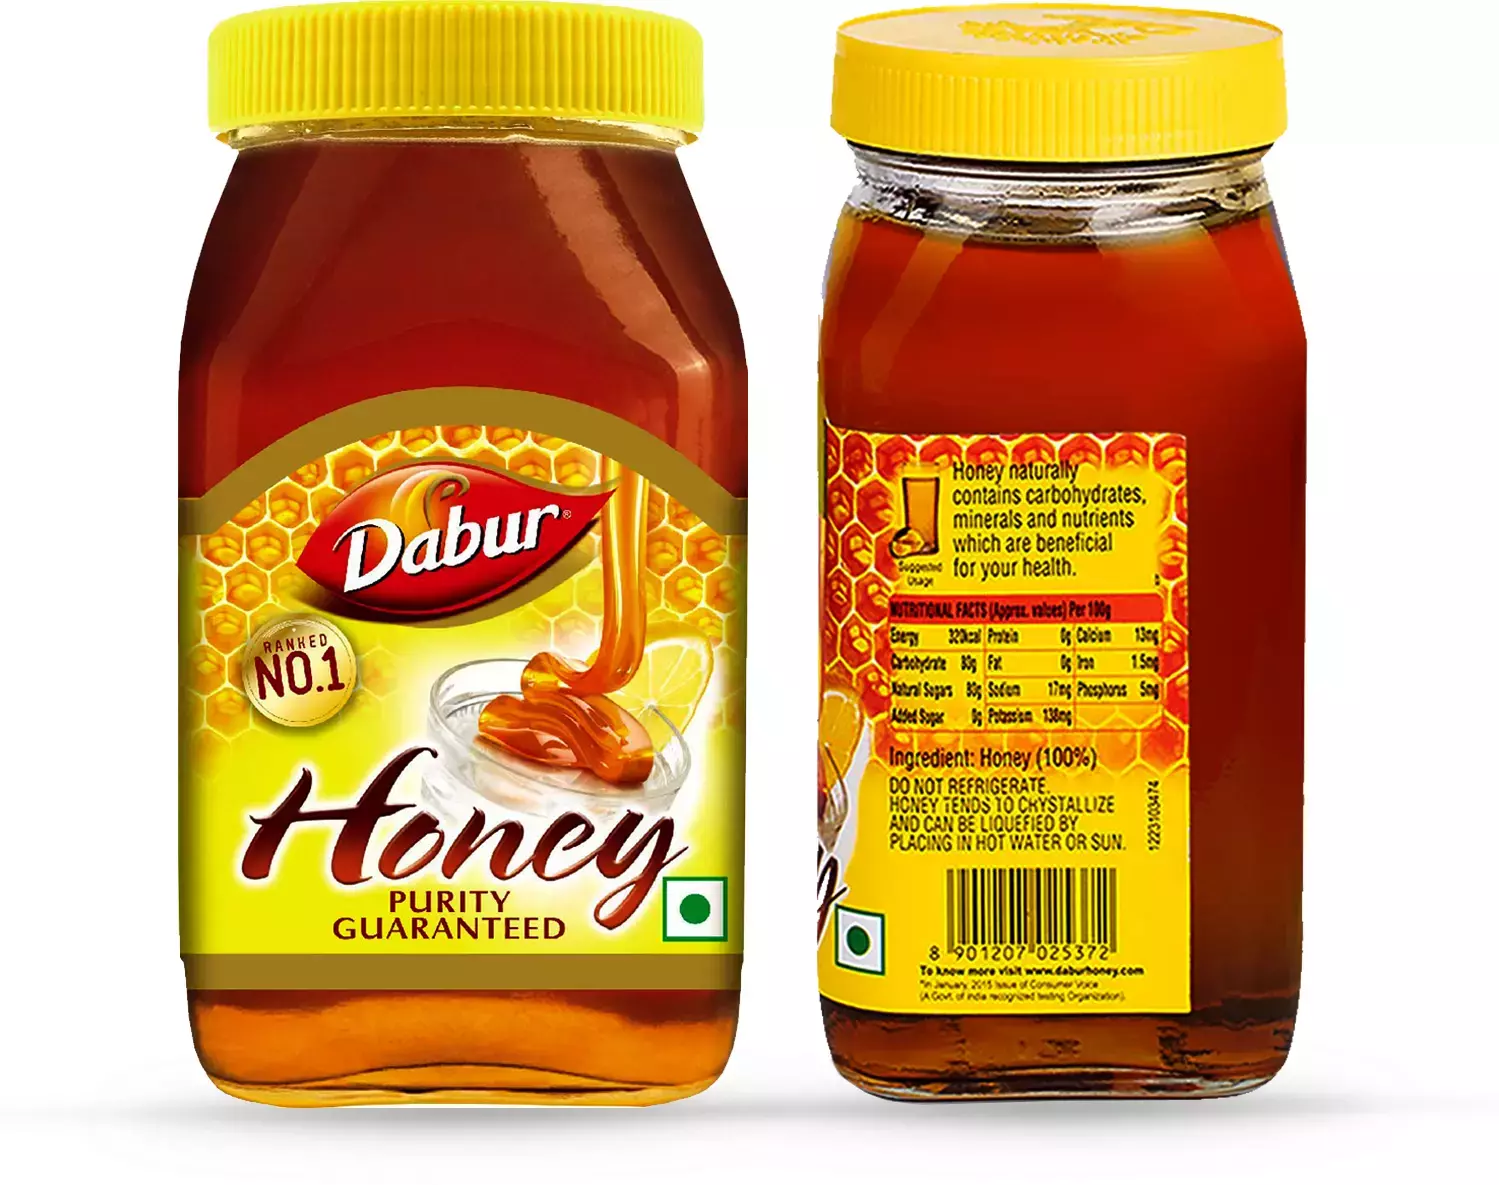 Dabur Honey: A Natural Elixir for Wellness and Health